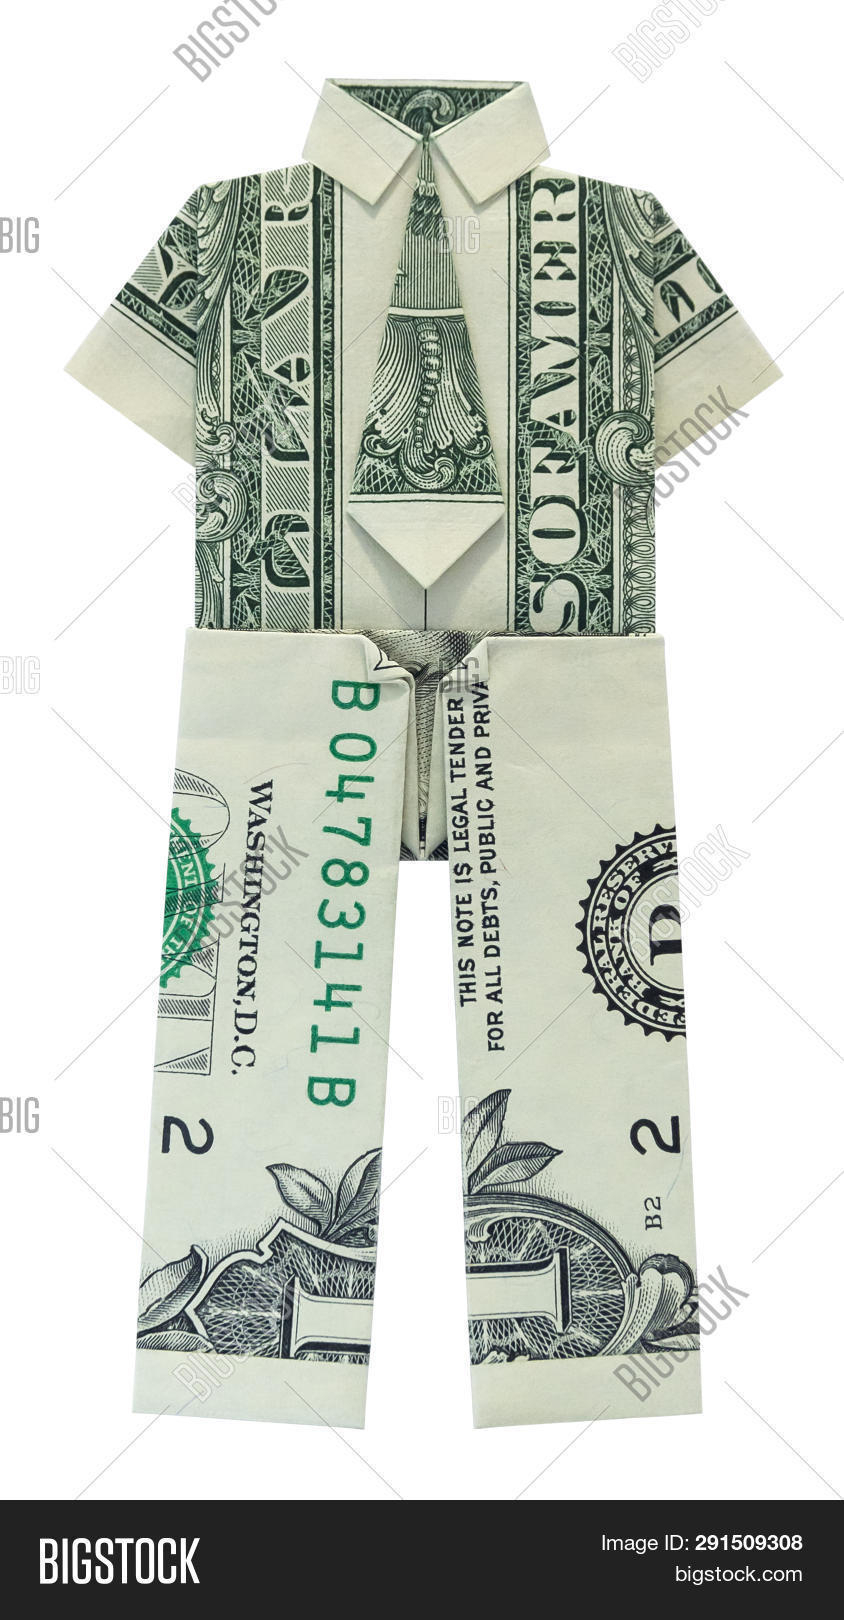 Origami Shirt And Tie Money Origami Shirt Image Photo Free Trial Bigstock